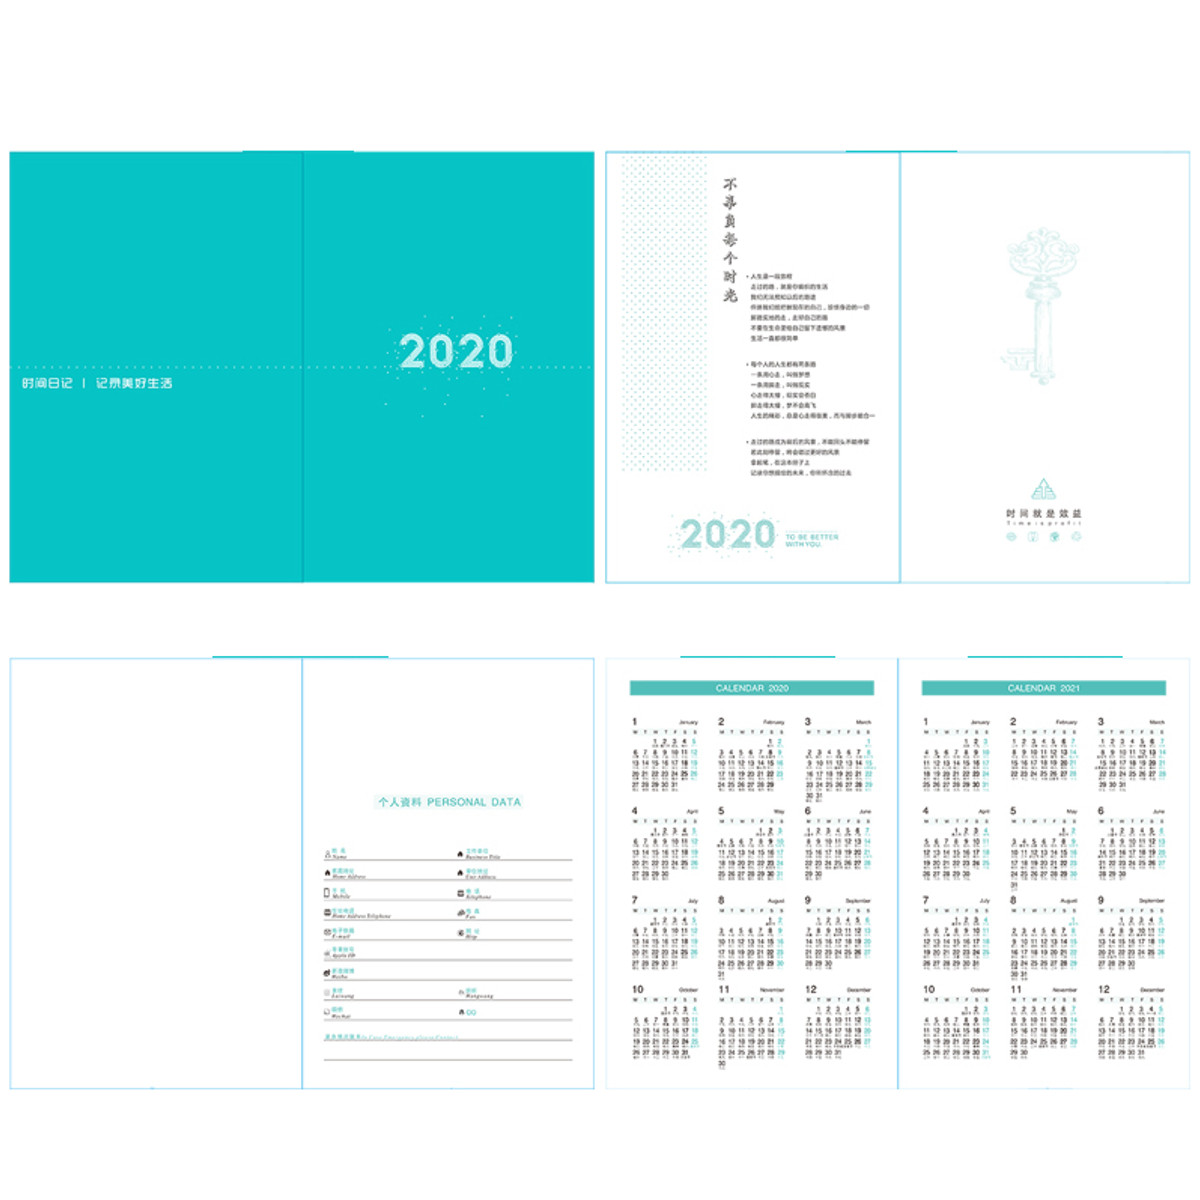 2020-schedule-this-custom-logo365-days-daily-schedule-calendar-notepad-work-log-notebook-1631347-5